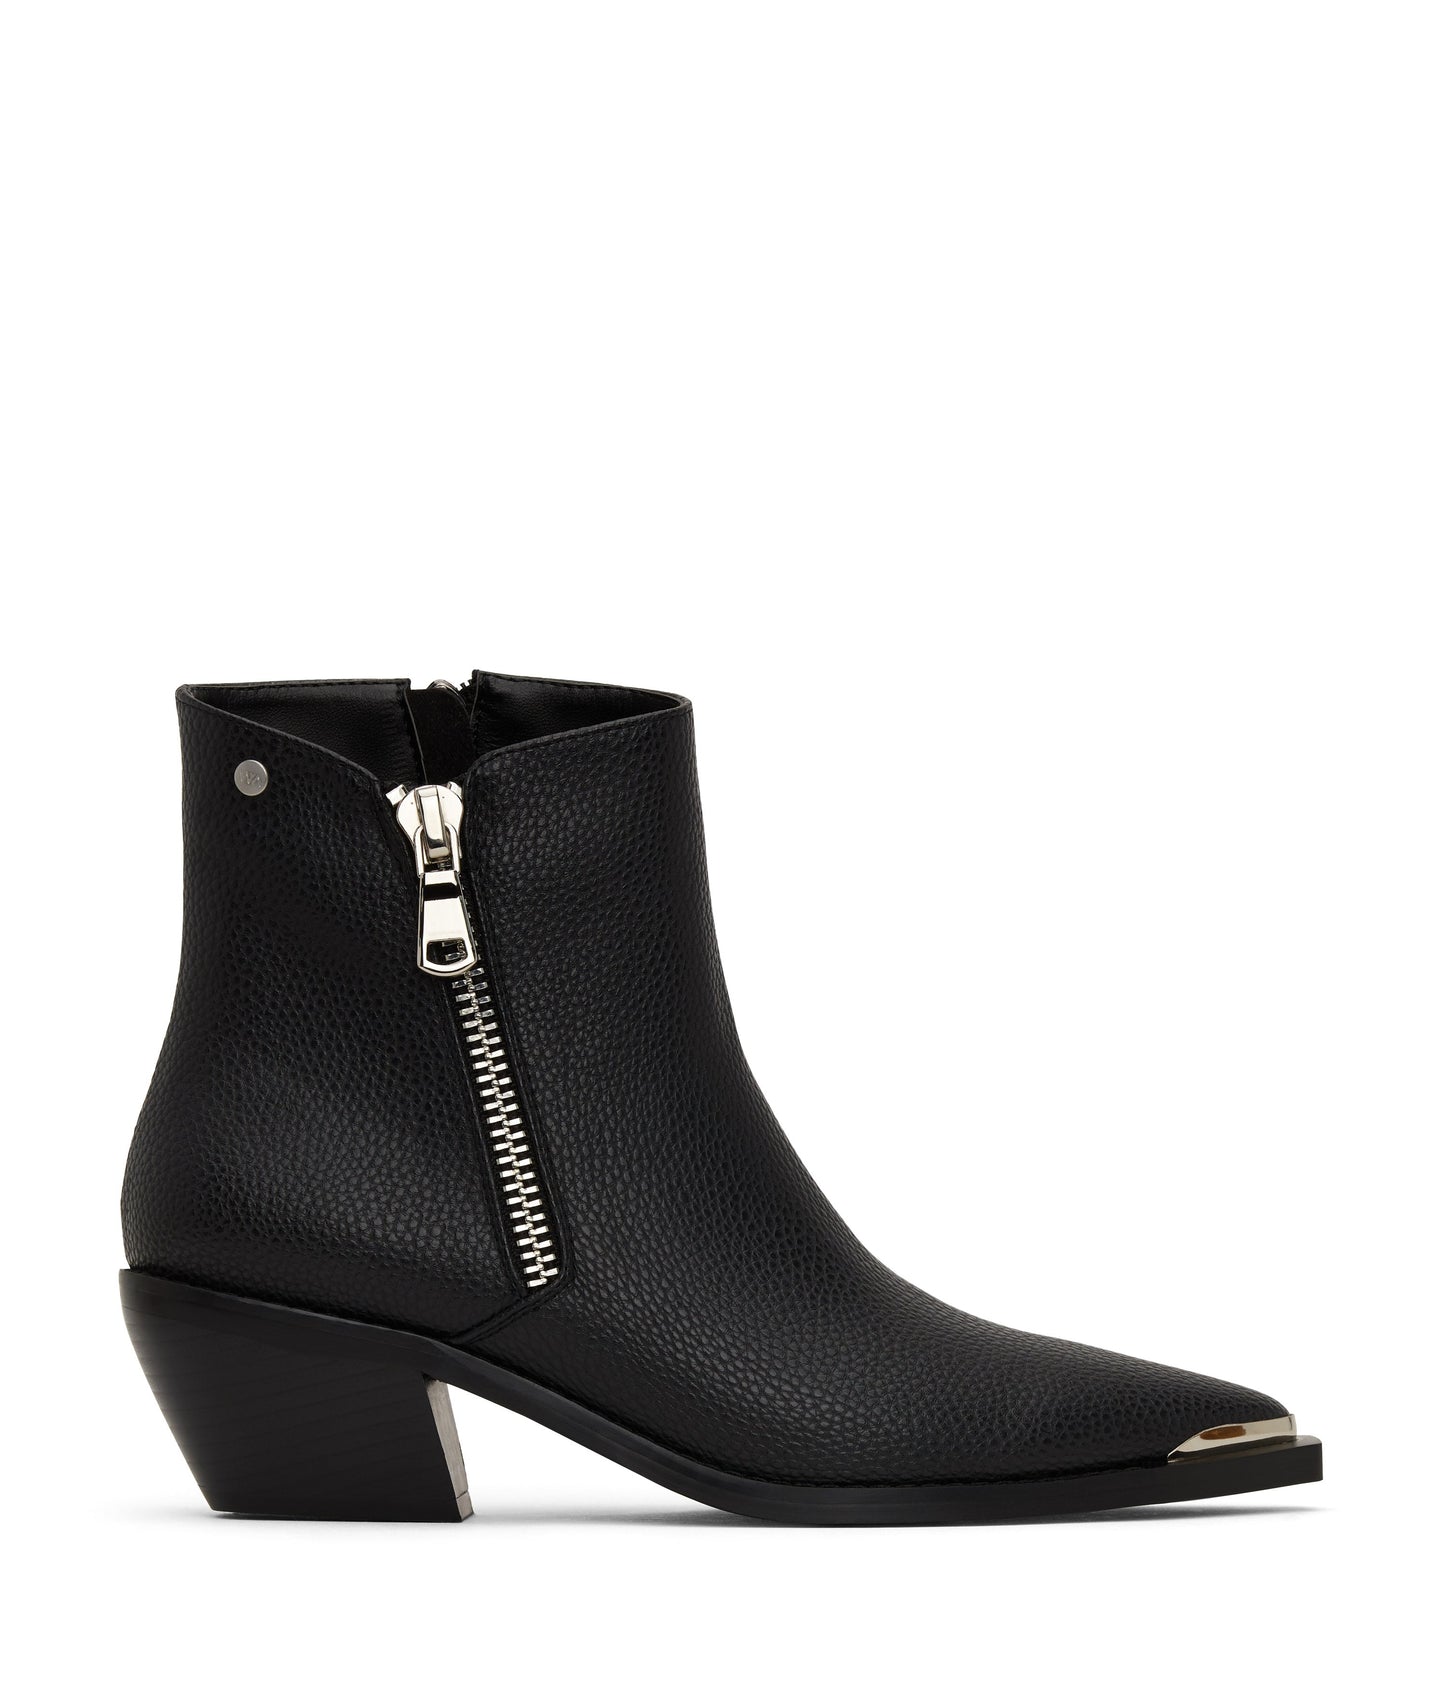 EVEX Women's Vegan Chelsea Boots | Color: Black - variant::black